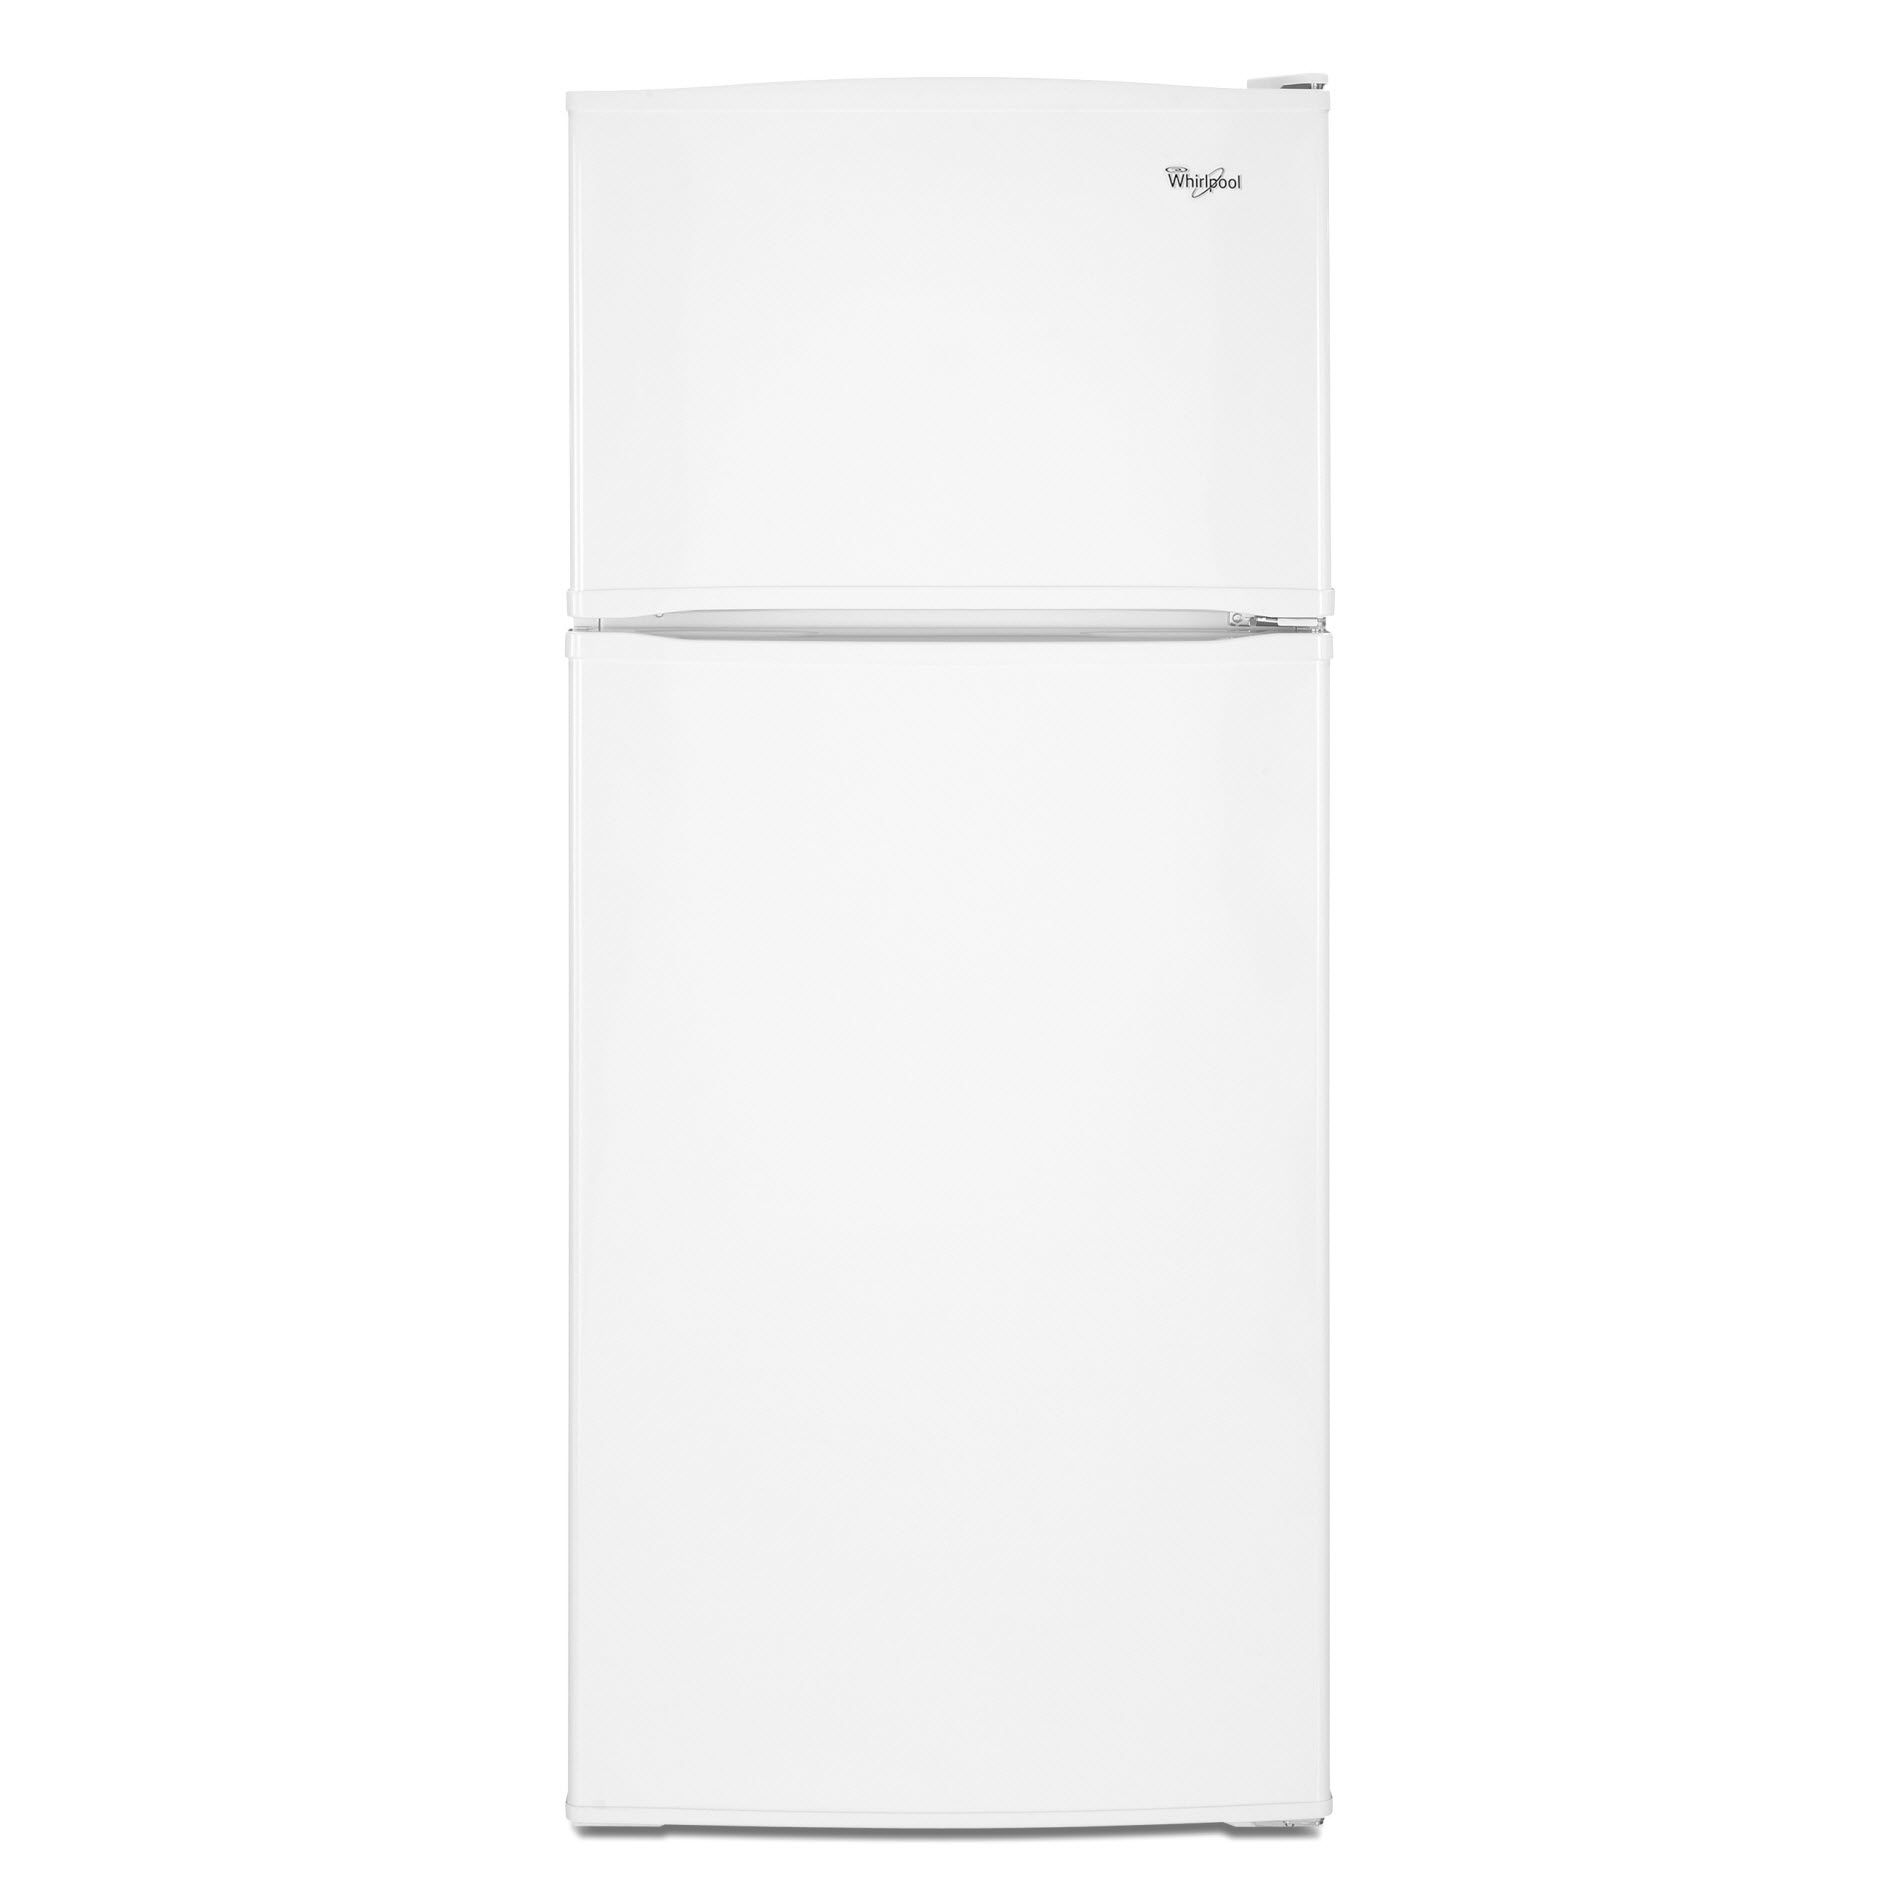 Whirlpool 15.9 cu. ft. Top-Freezer Refrigerator - White